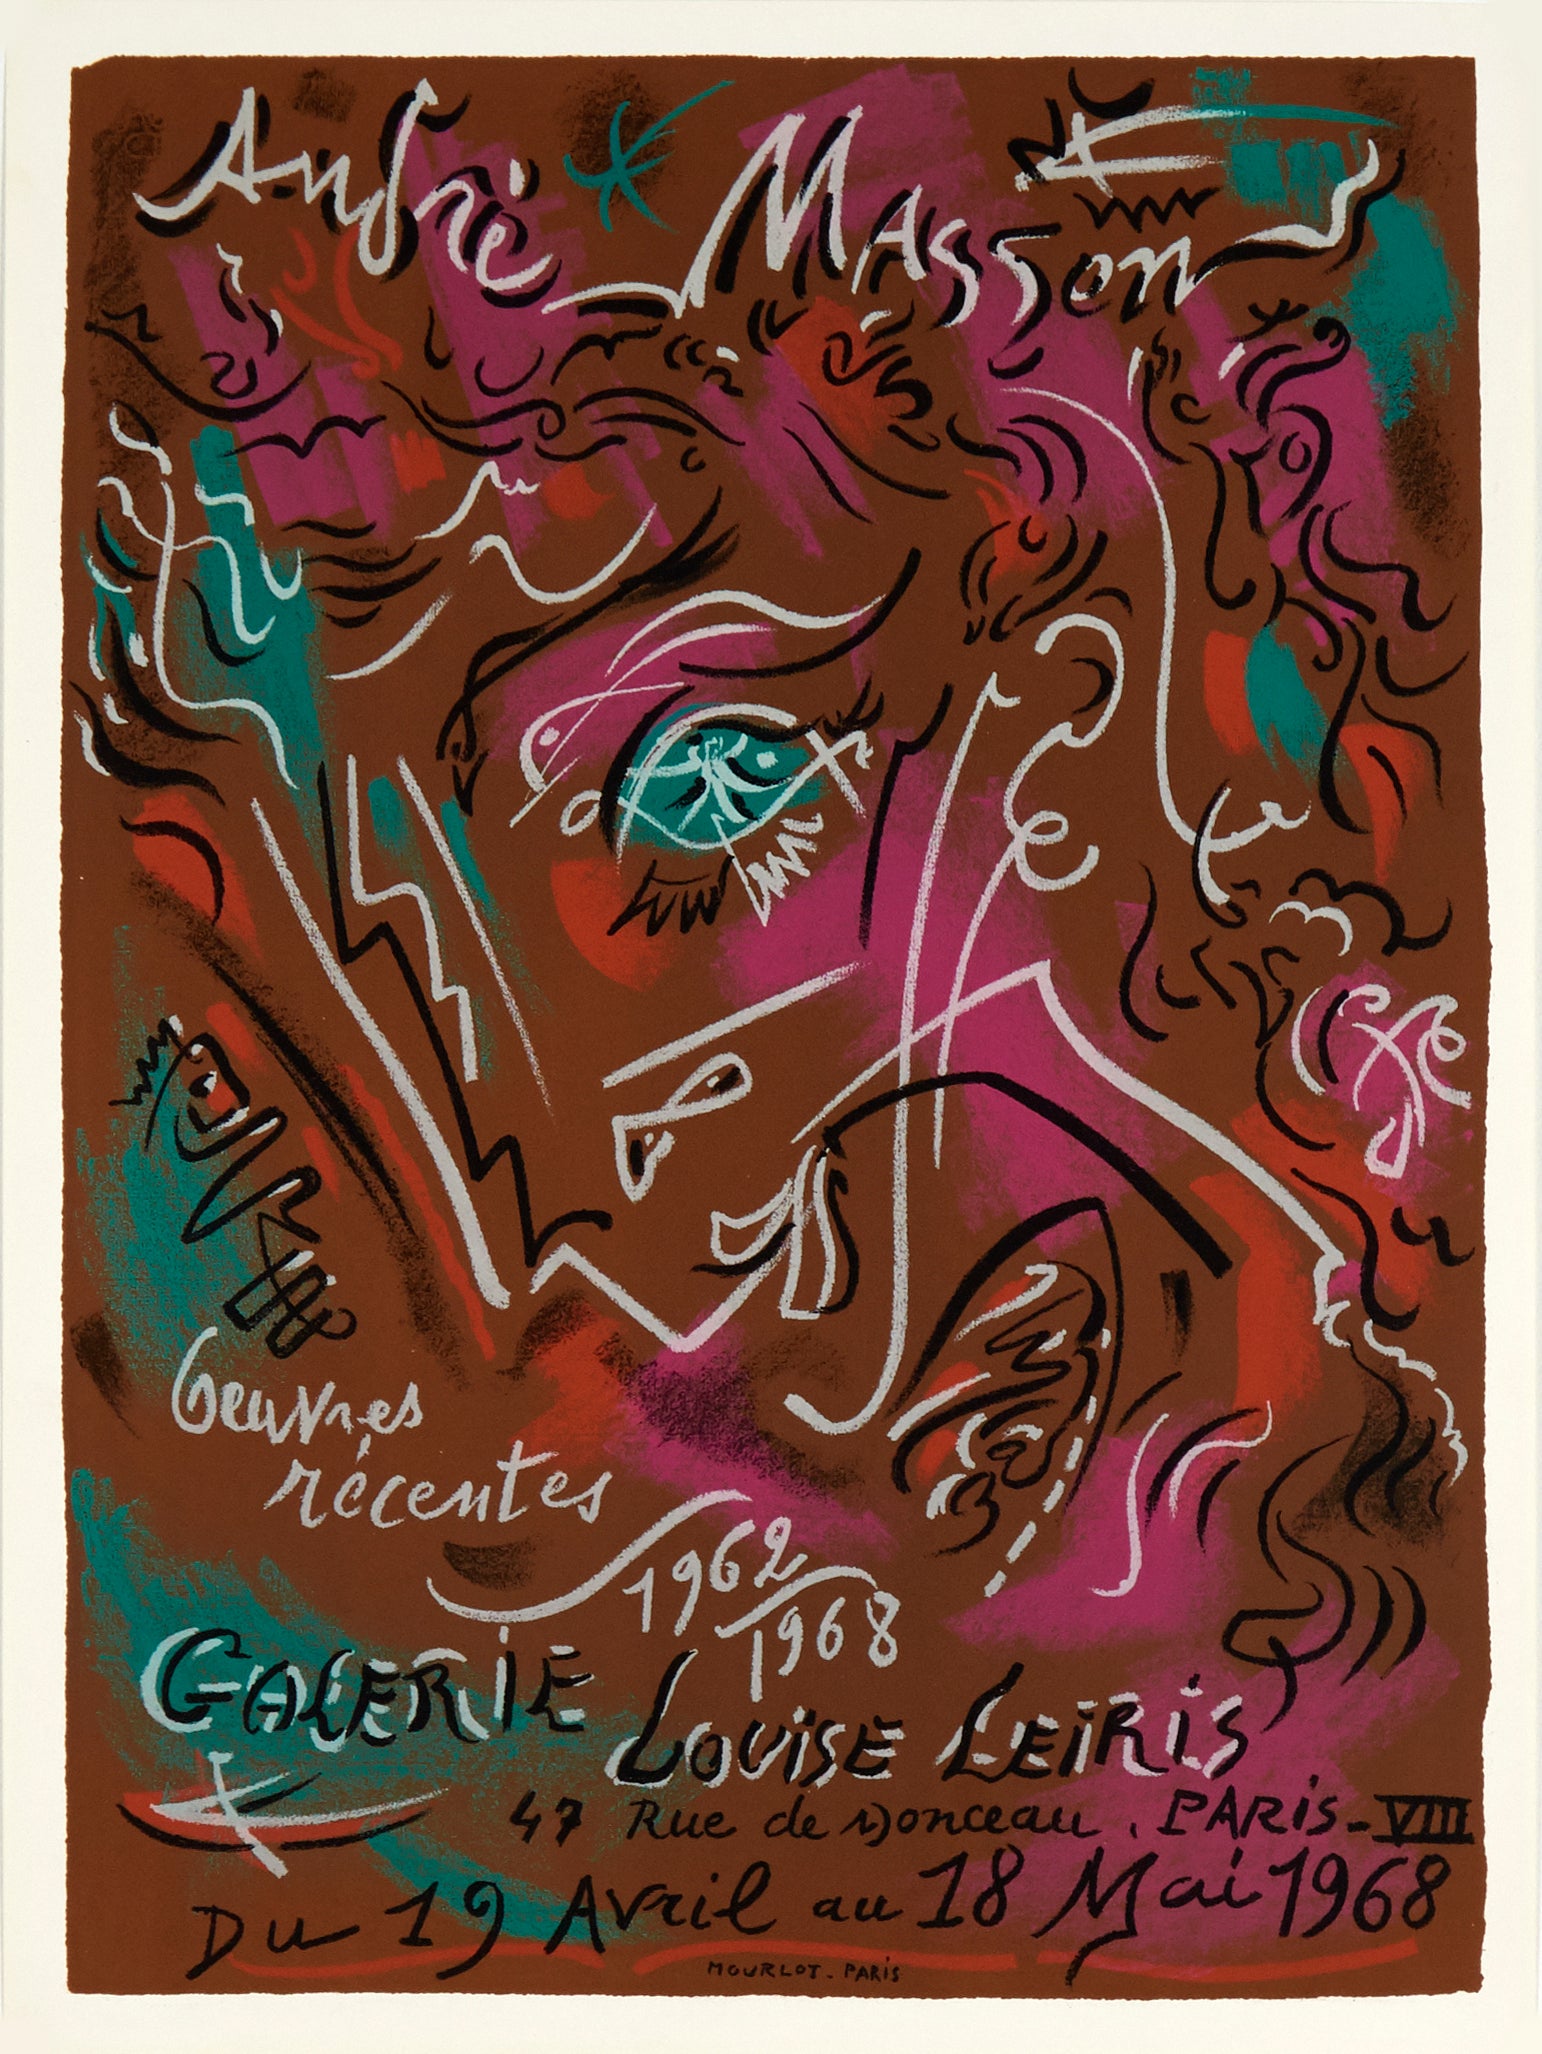 Recent works 1962-1968 - Galerie Louise Leiris by André Masson, 1968 - Mourlot Editions - Fine_Art - Poster - Lithograph - Wall Art - Vintage - Prints - Original